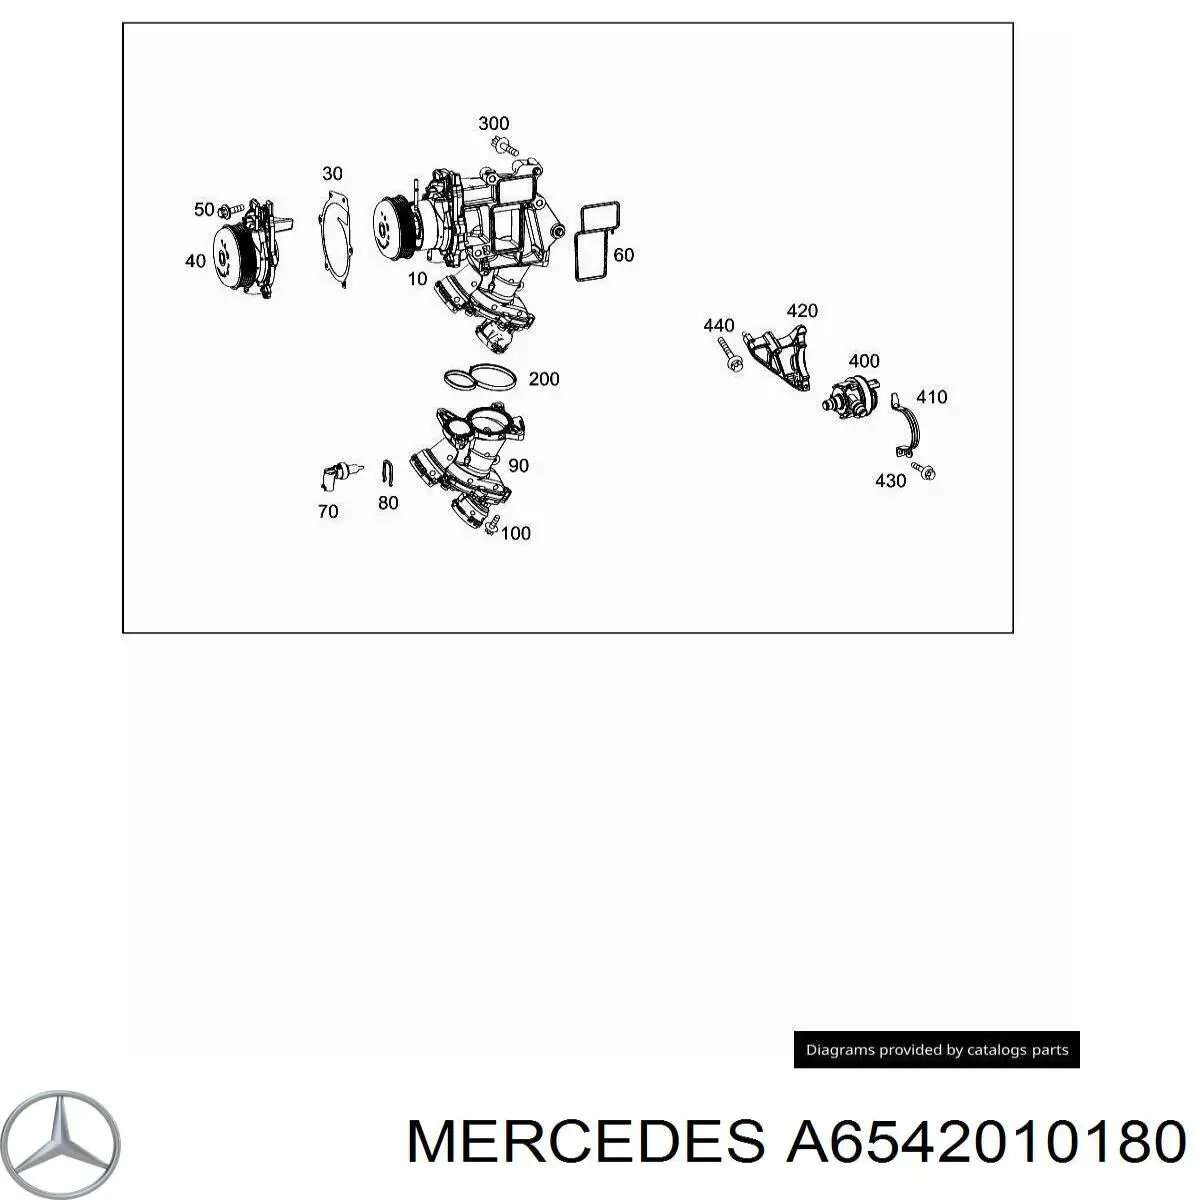 Vedante de bomba de água para Mercedes GLS (X167)